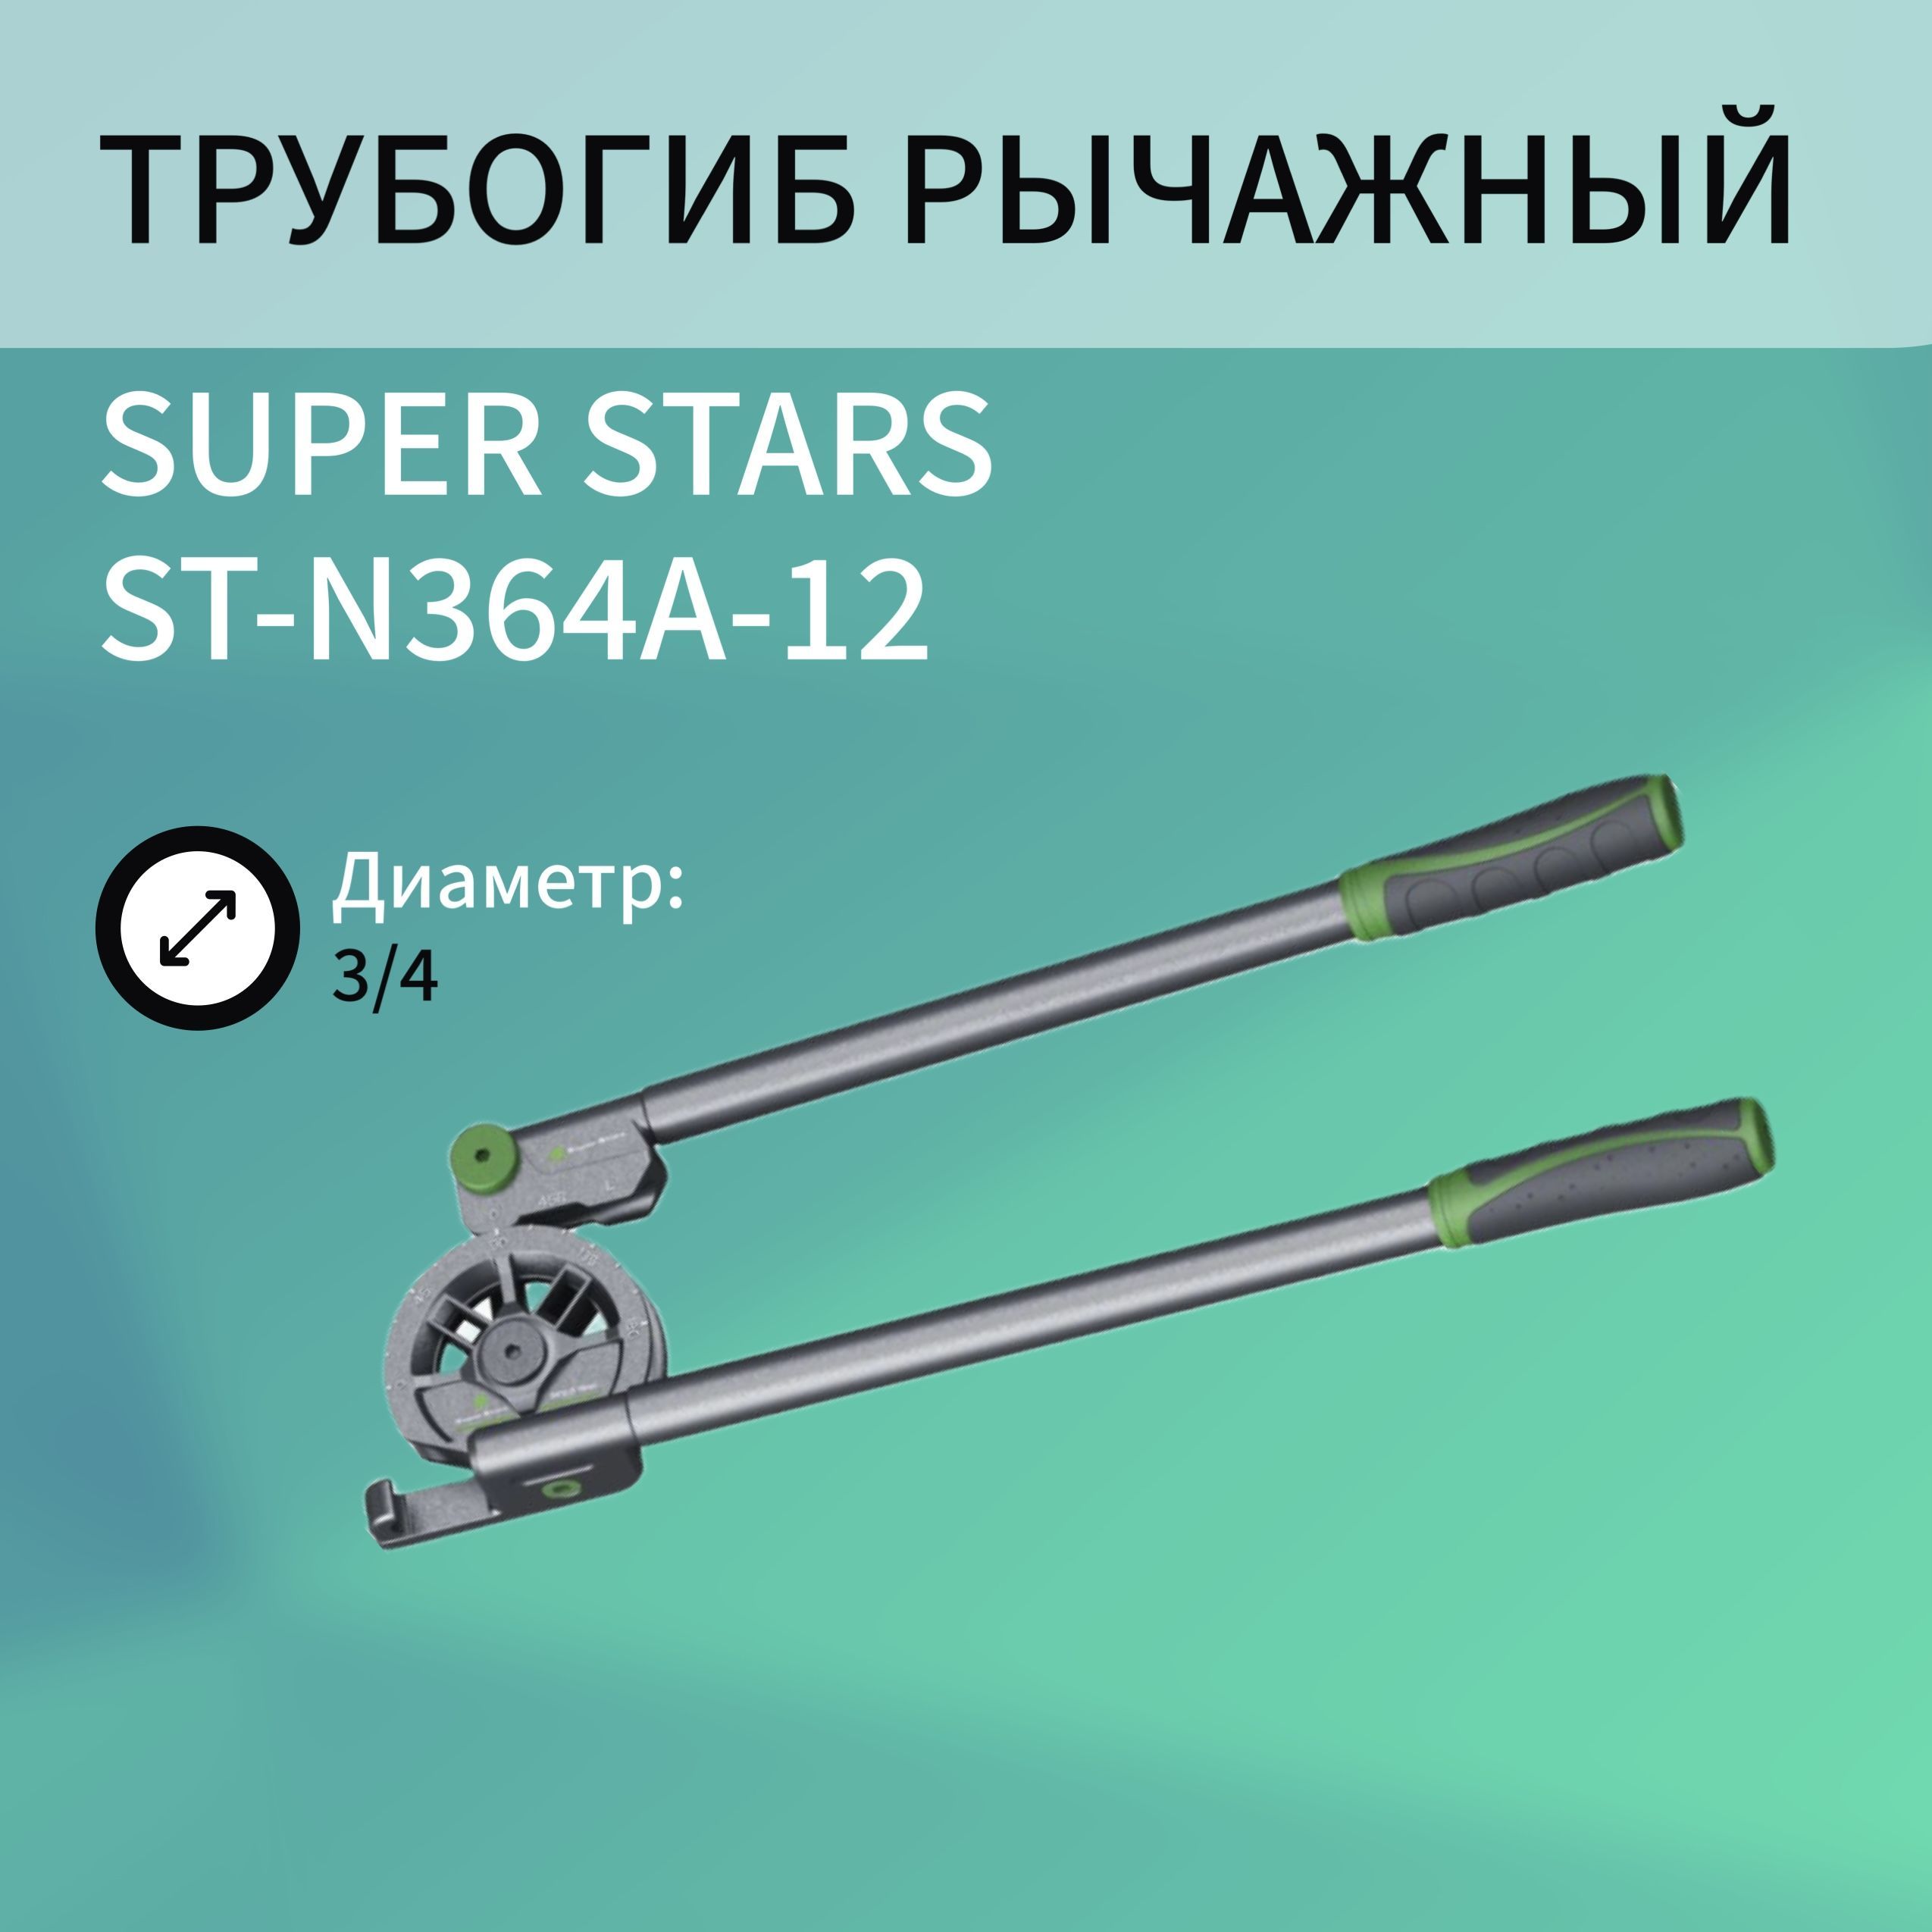 Трубогиб рычажный SUPER STARS ST-N364A-12, диаметр 3/4